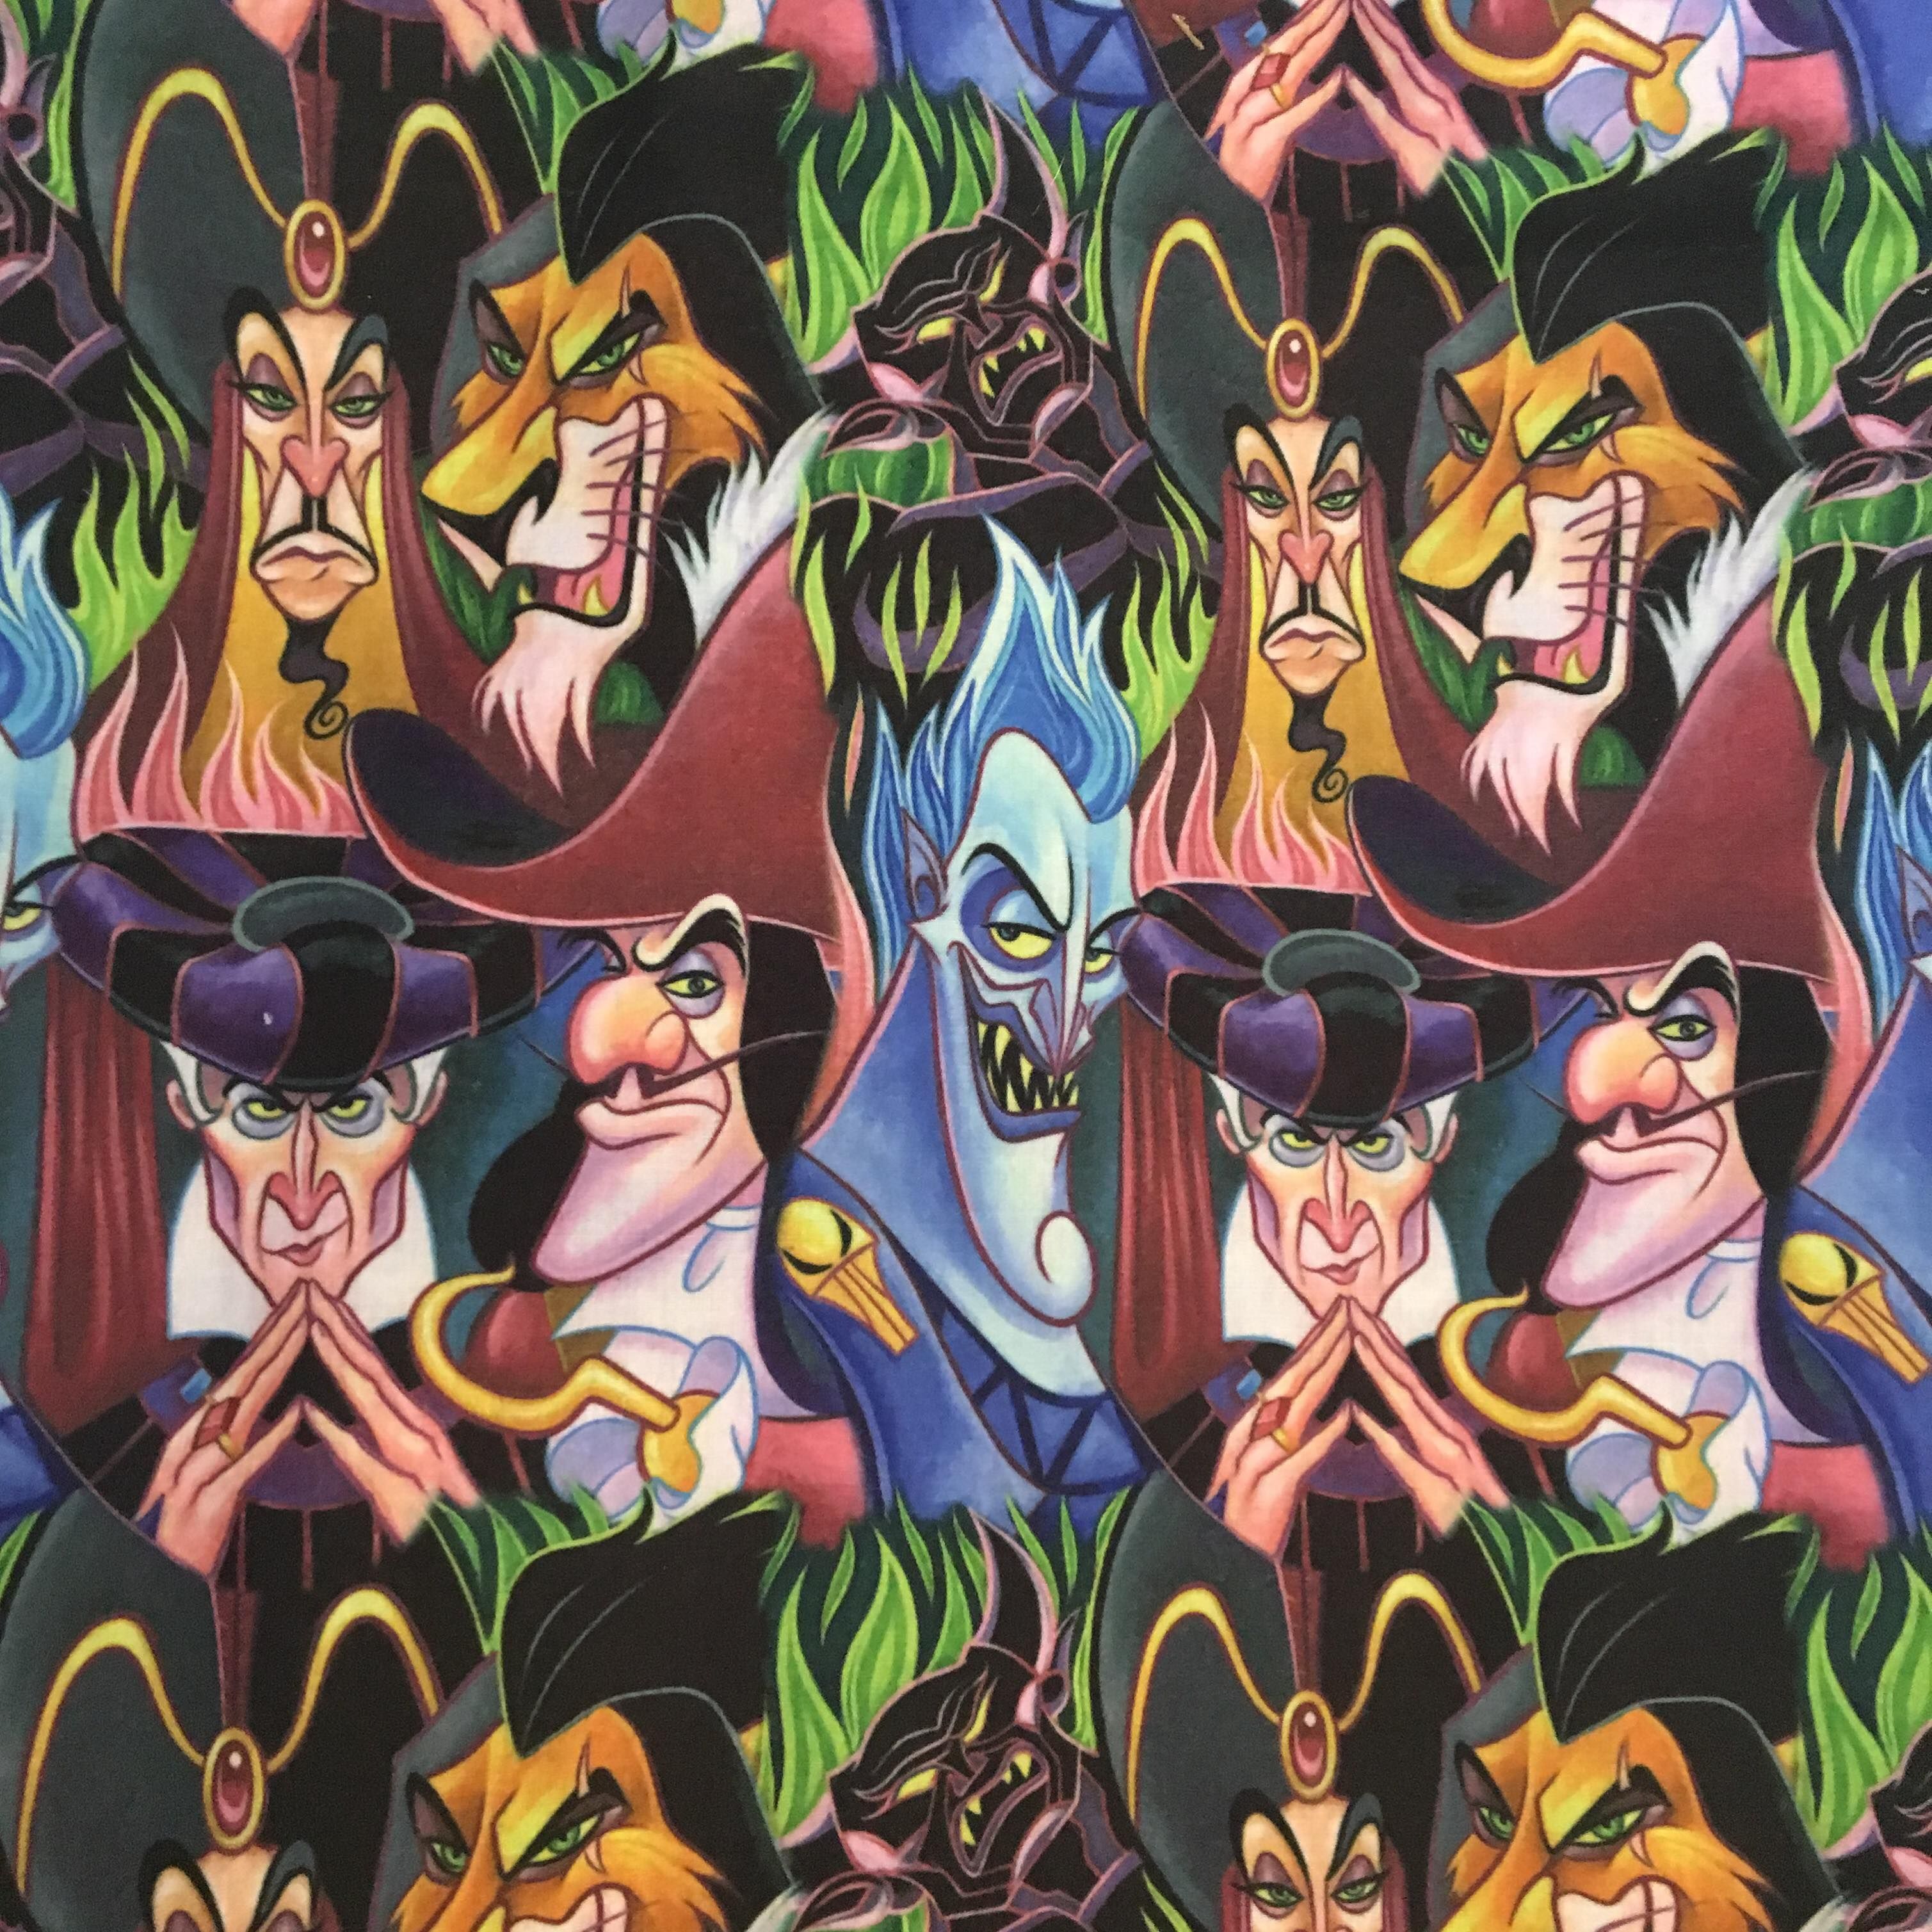 Disney Villain wallpaper Fabric. Disney Patterns in 2019